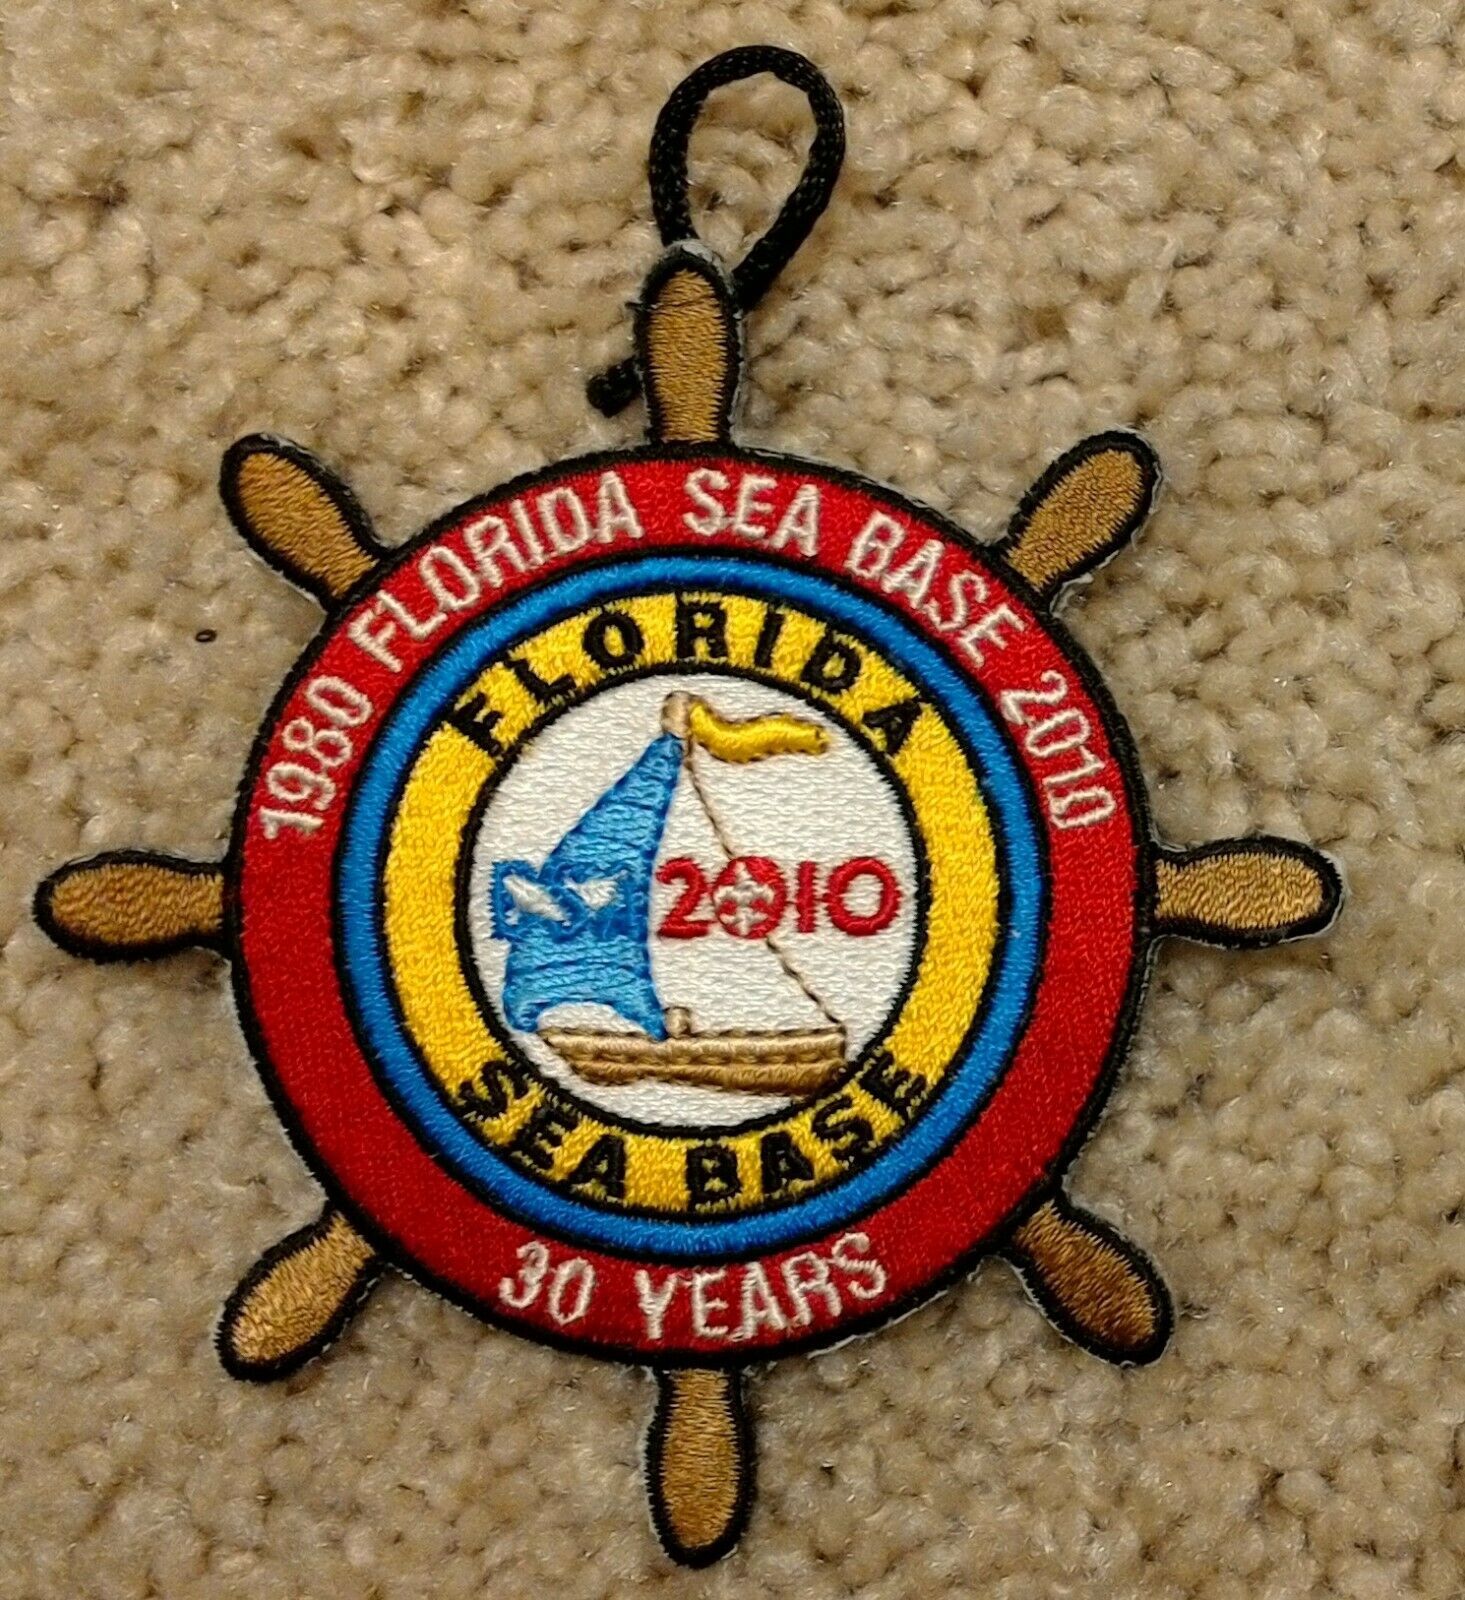 Florida Sea Base Bsa, 30 Year, 1980-2010 Patch